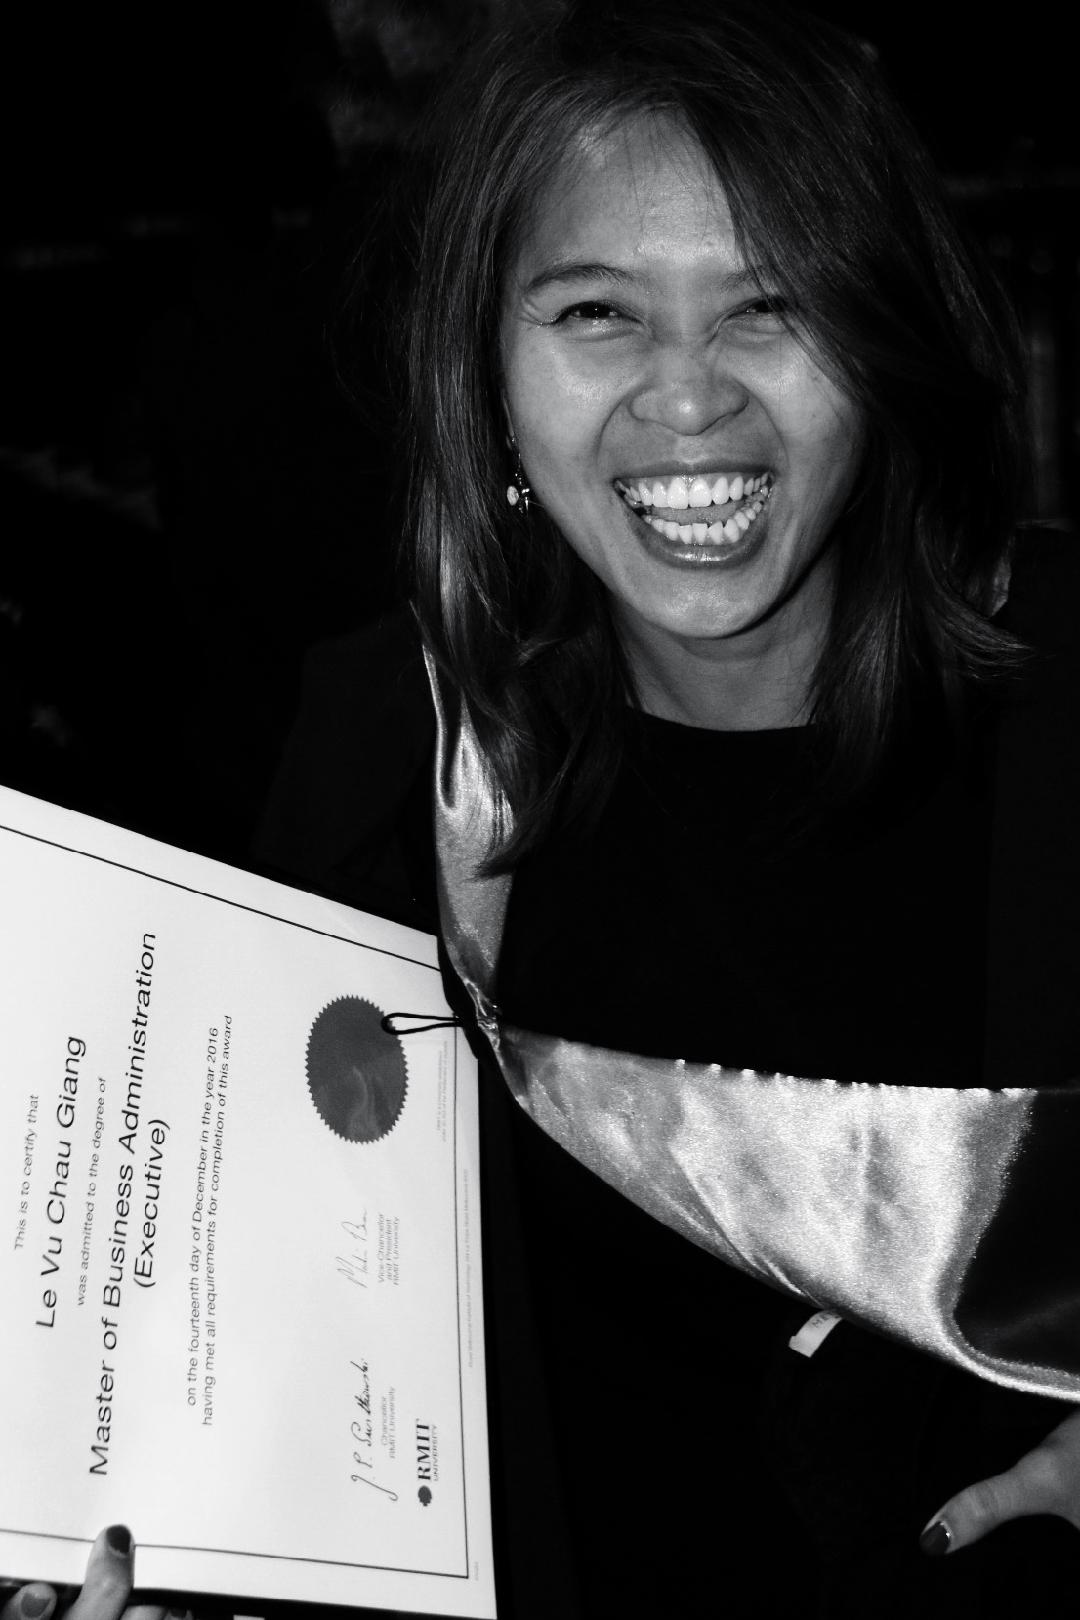 Gigi Le tại lễ Tốt nghiệp ở Mebourne năm 2016